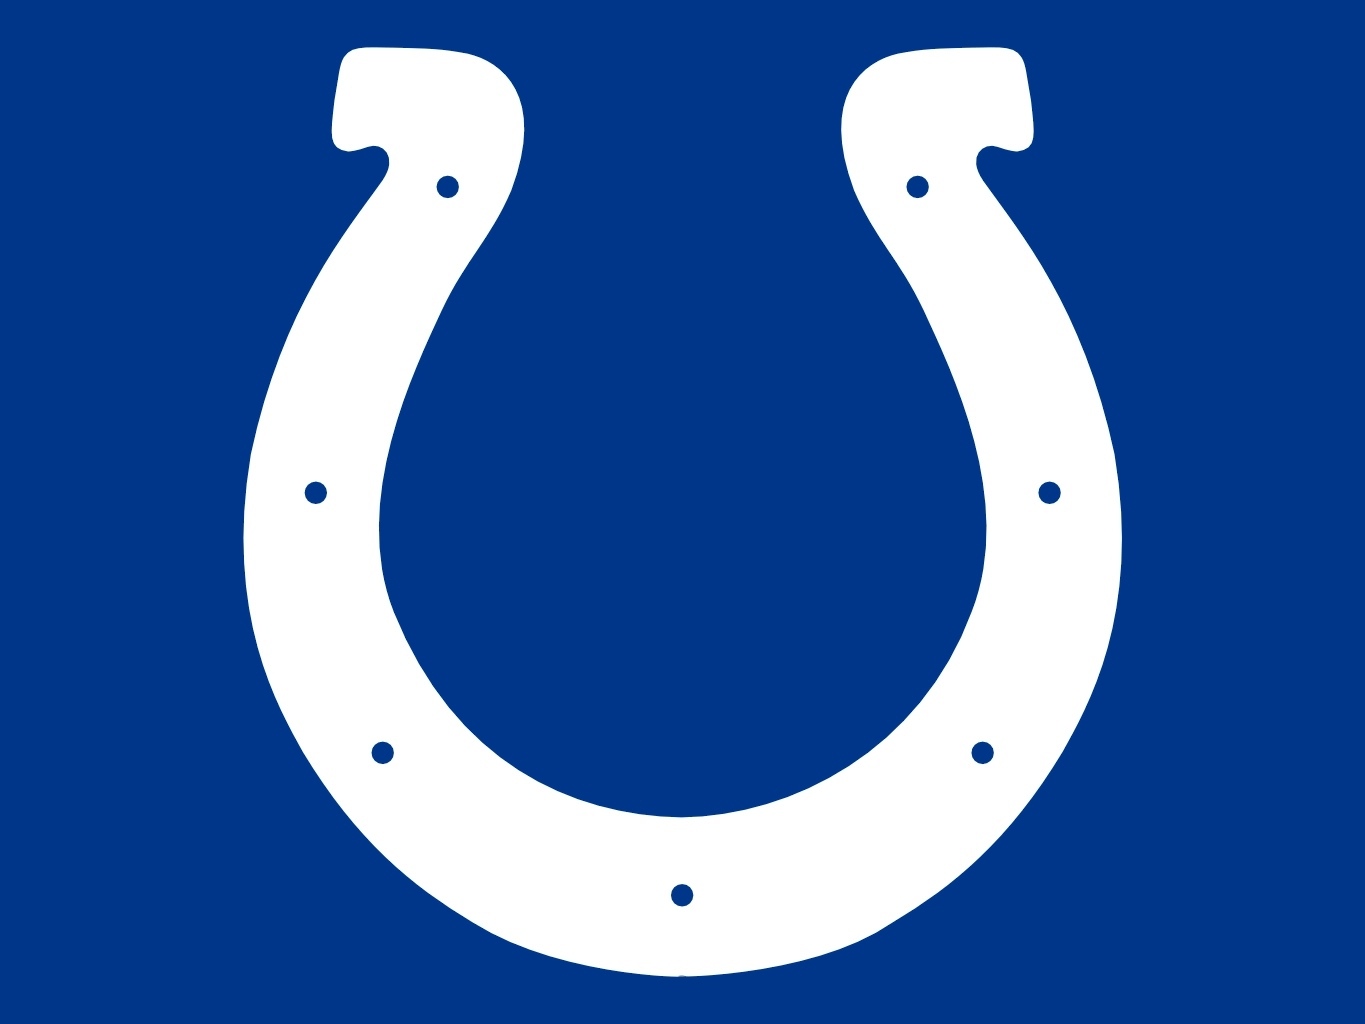 Indianapolis_Colts3.jpg